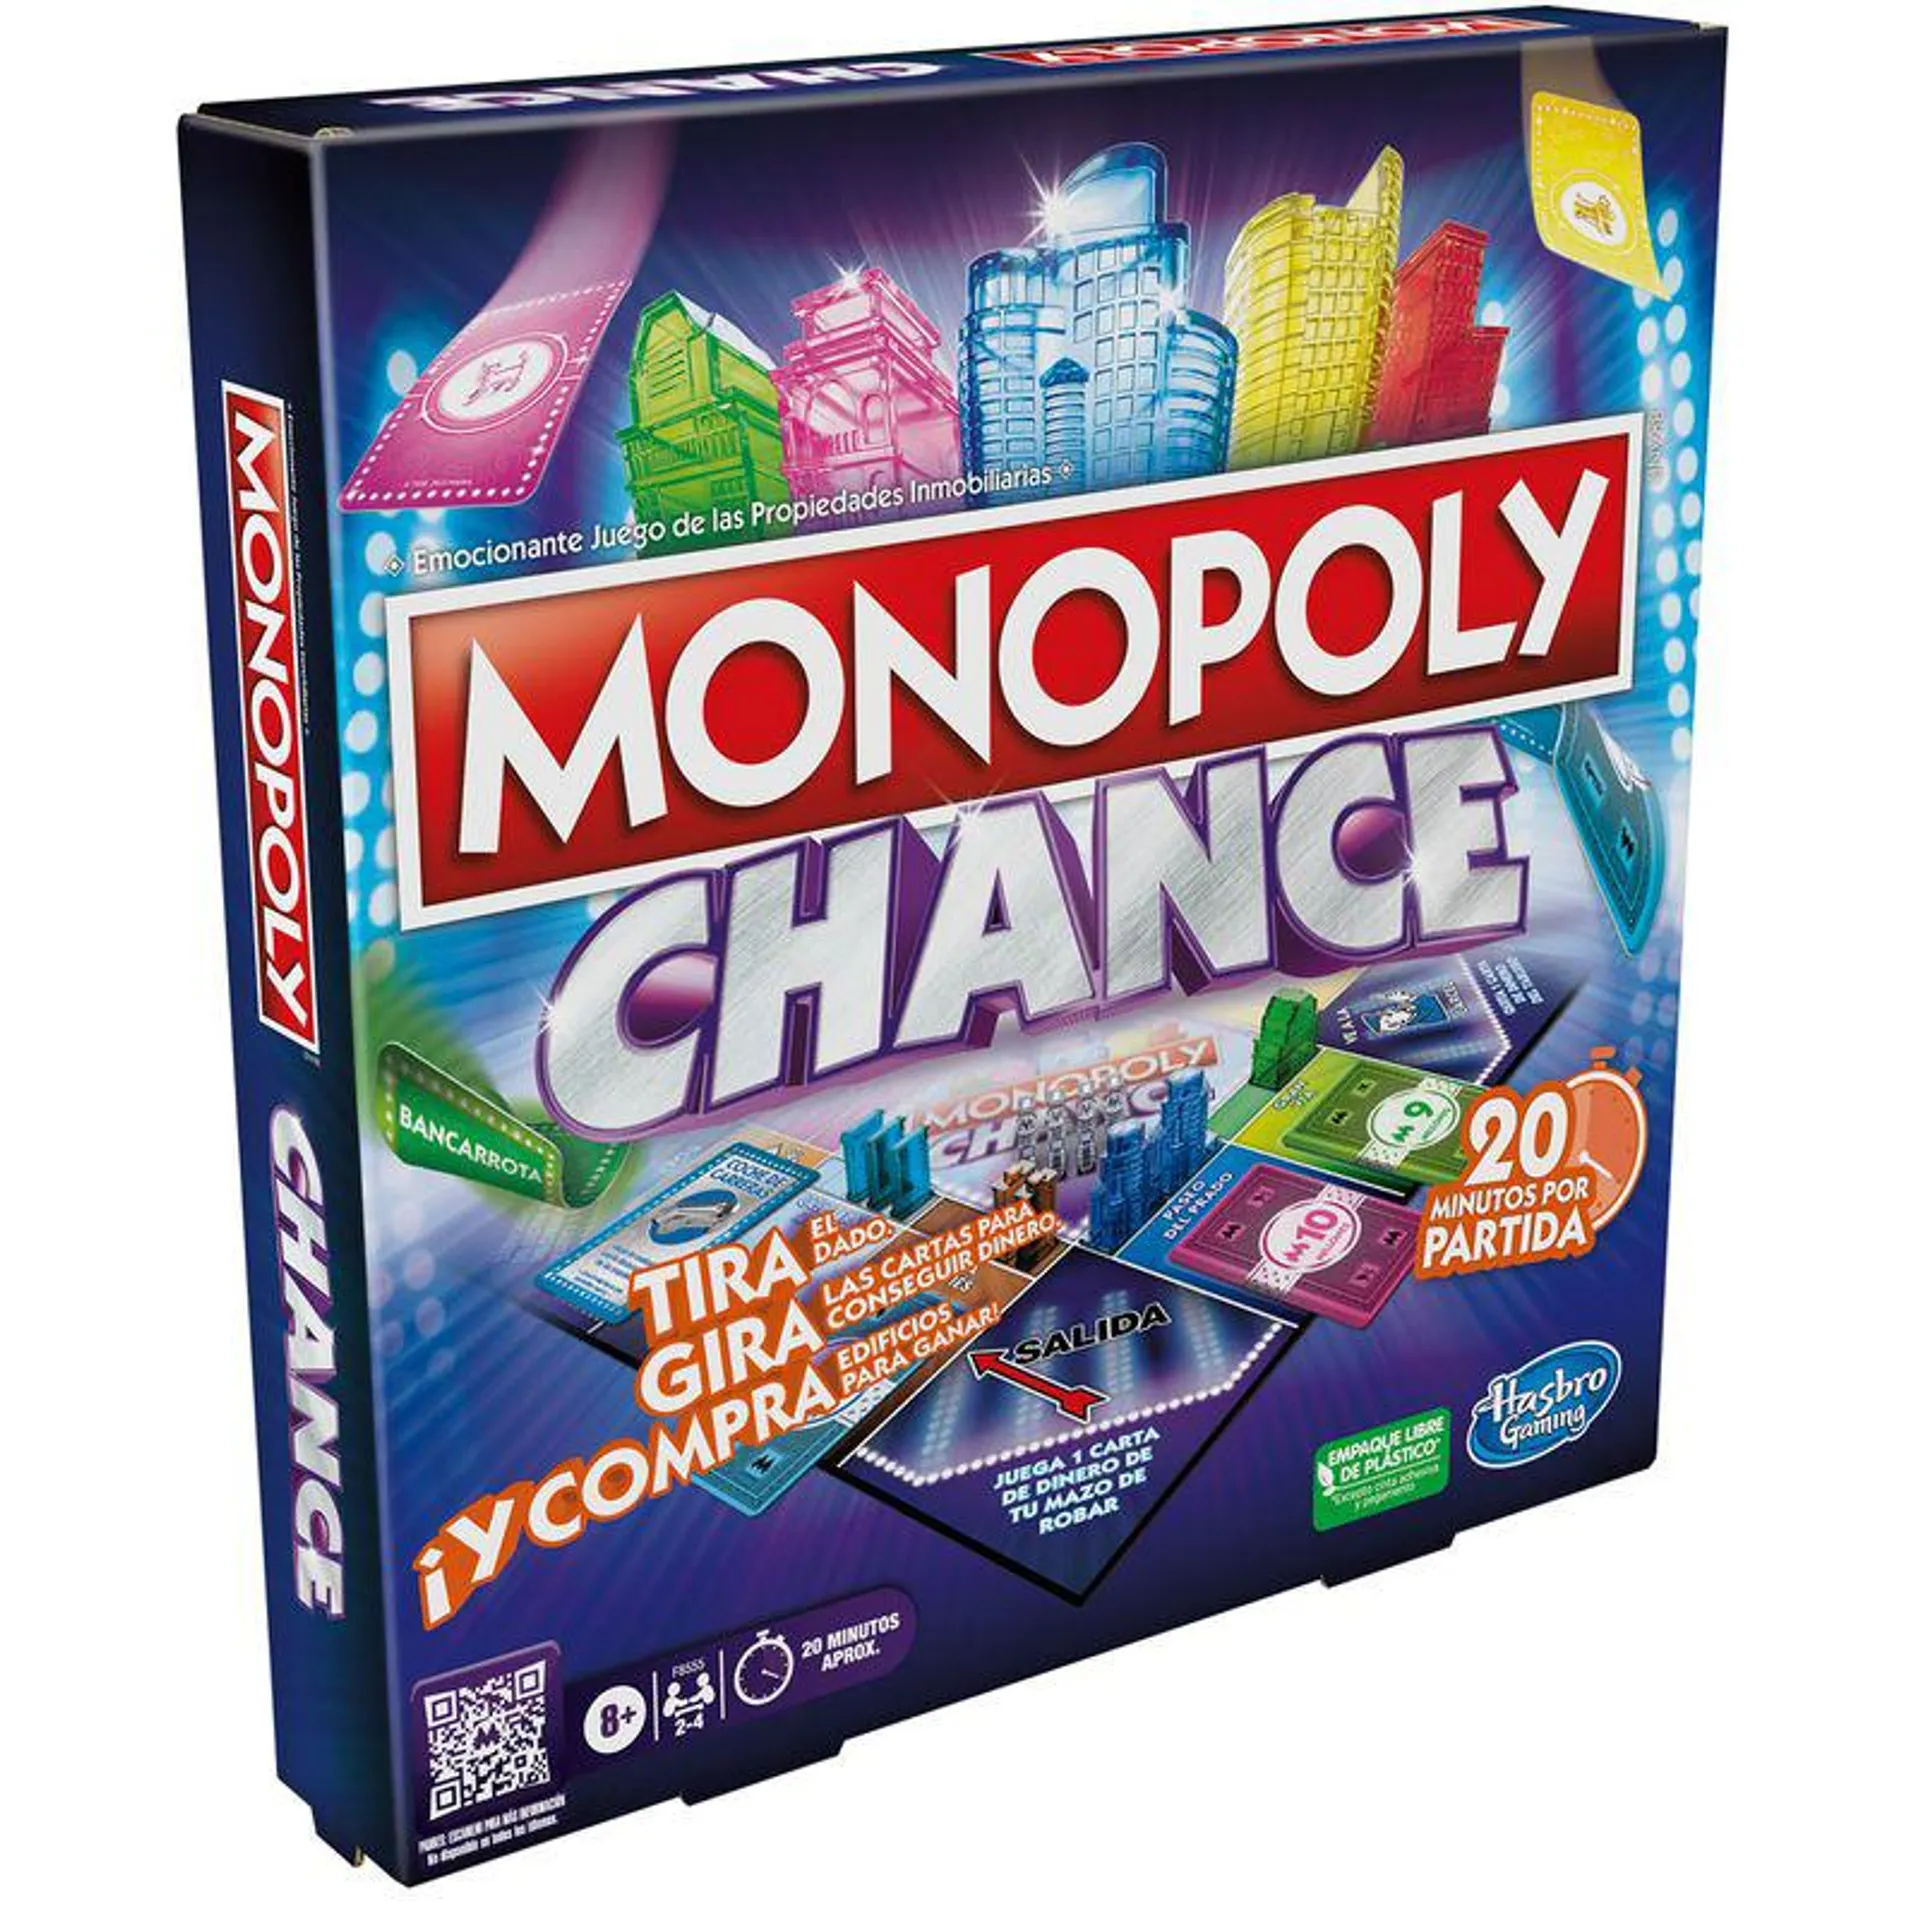 Monopoly Change